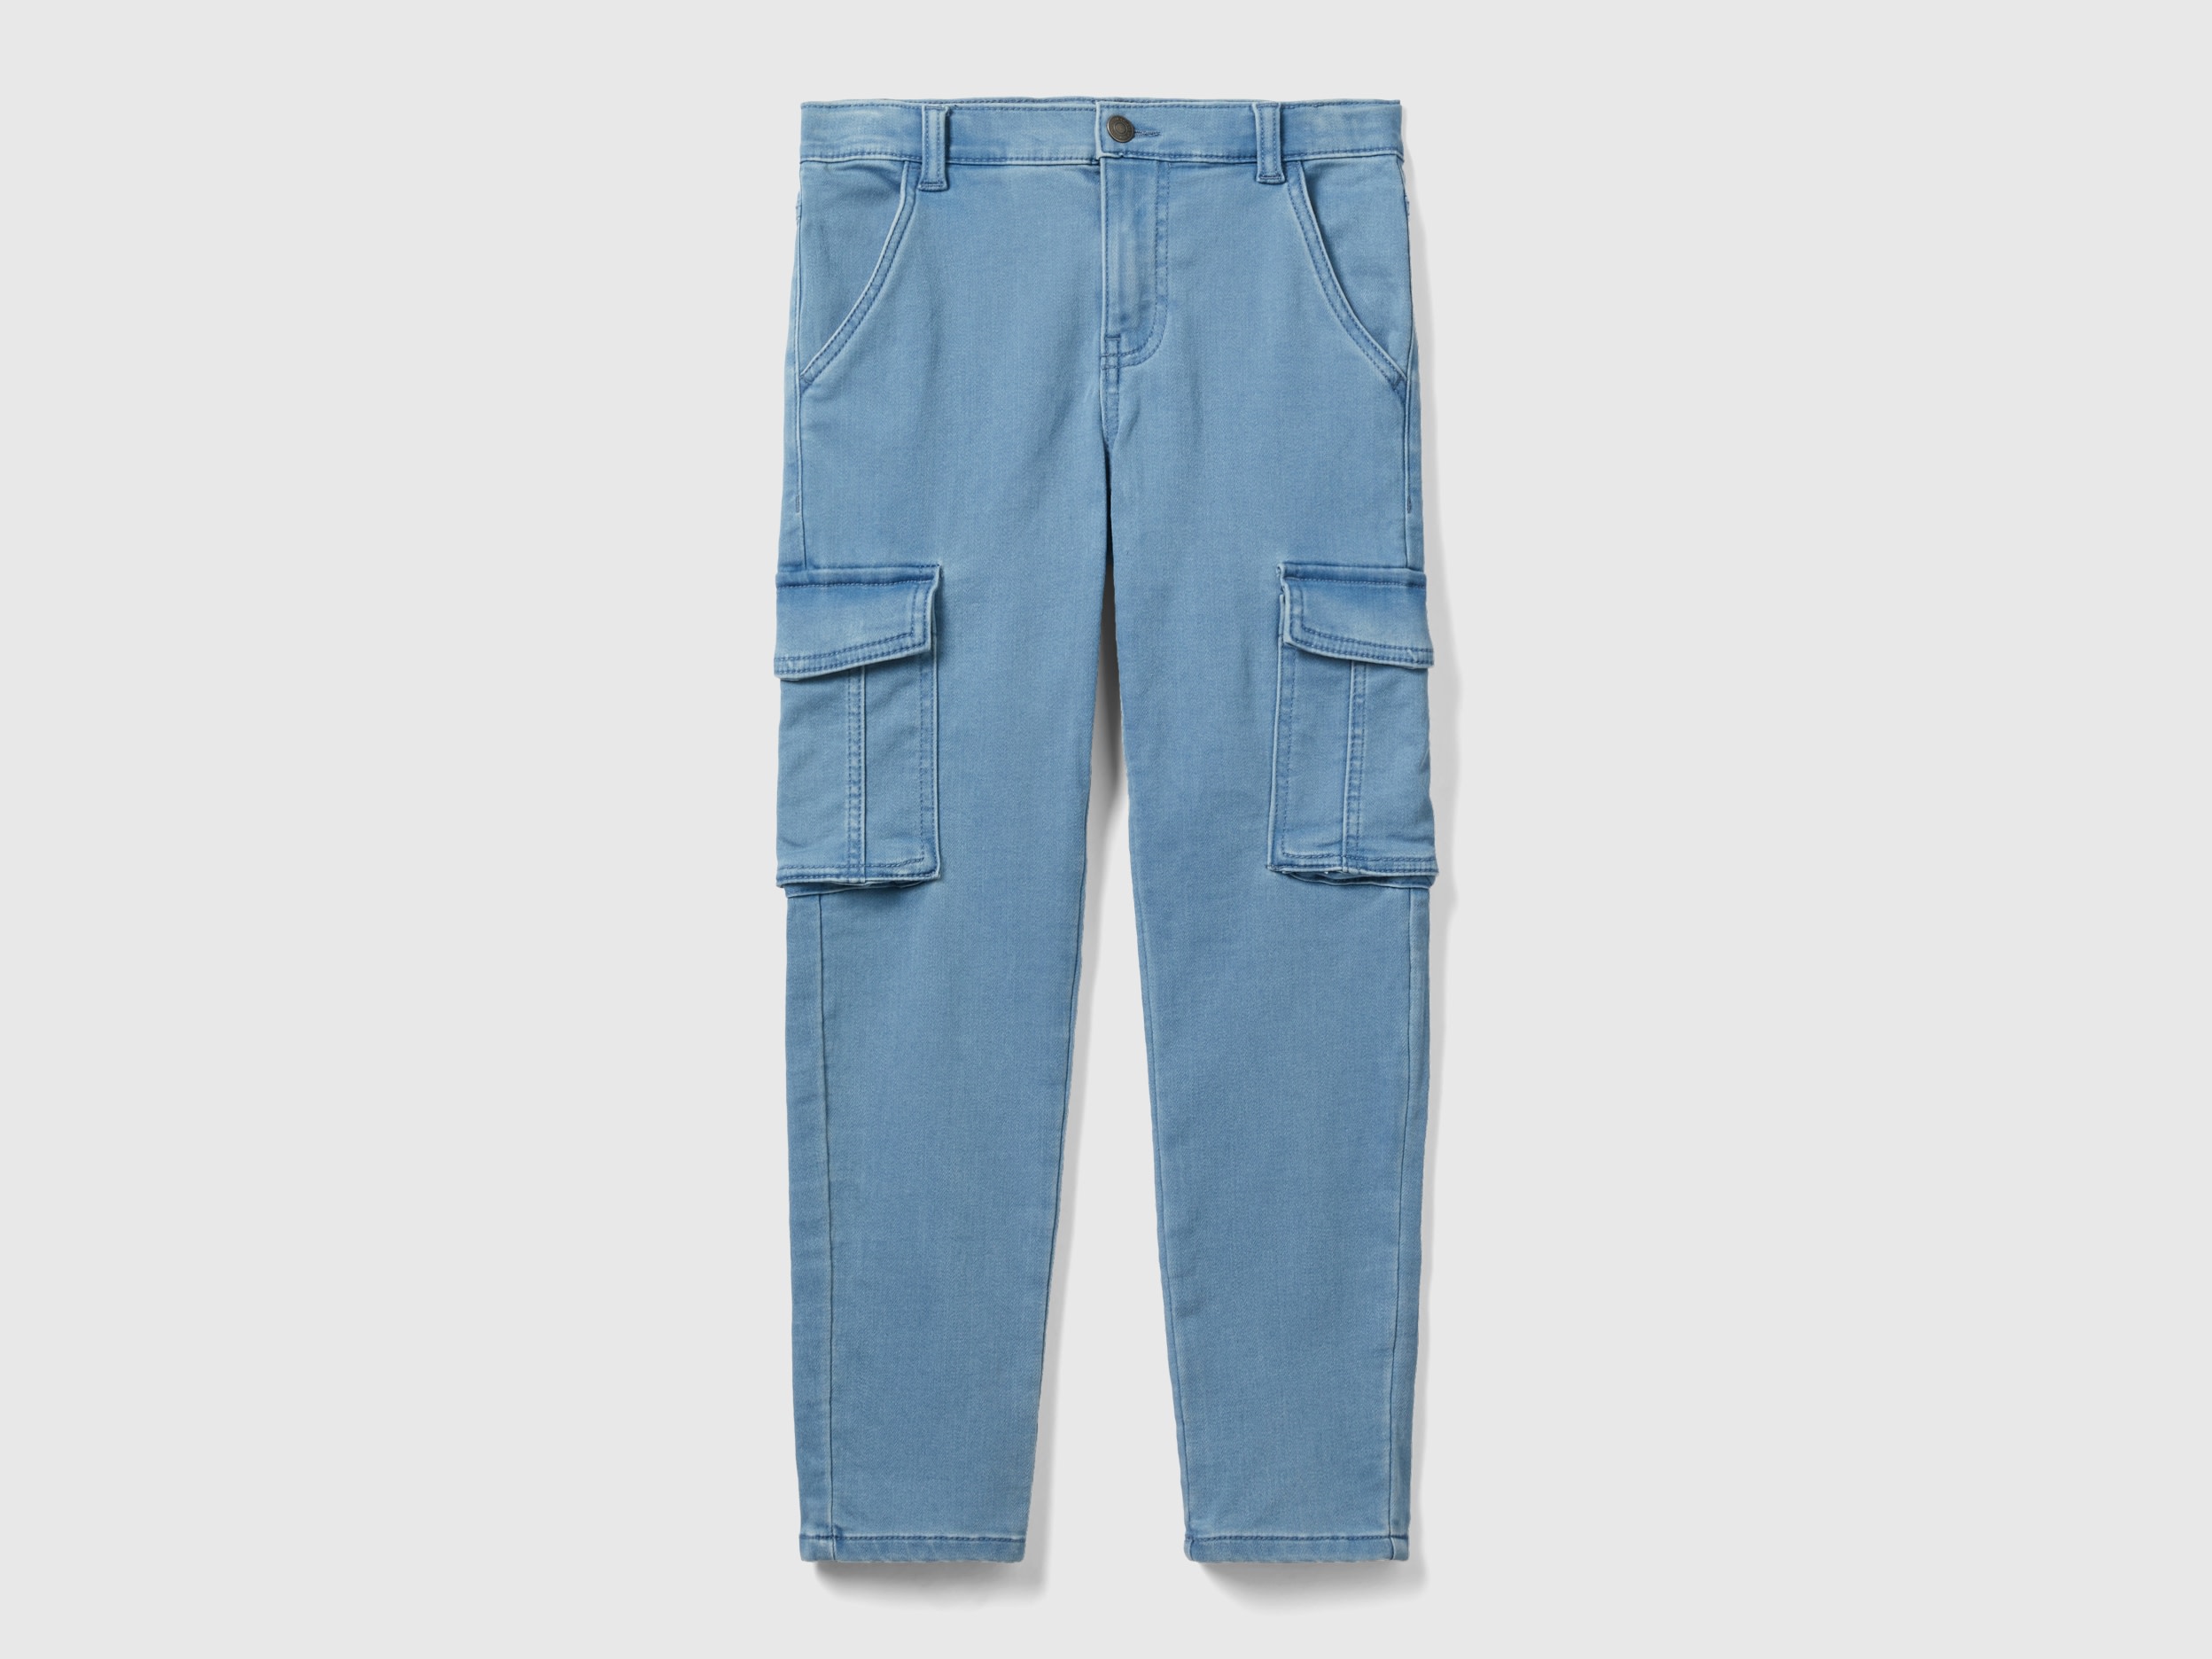 Benetton, Slim Fit Jeans With Pockets, size M, Light Blue, Kids